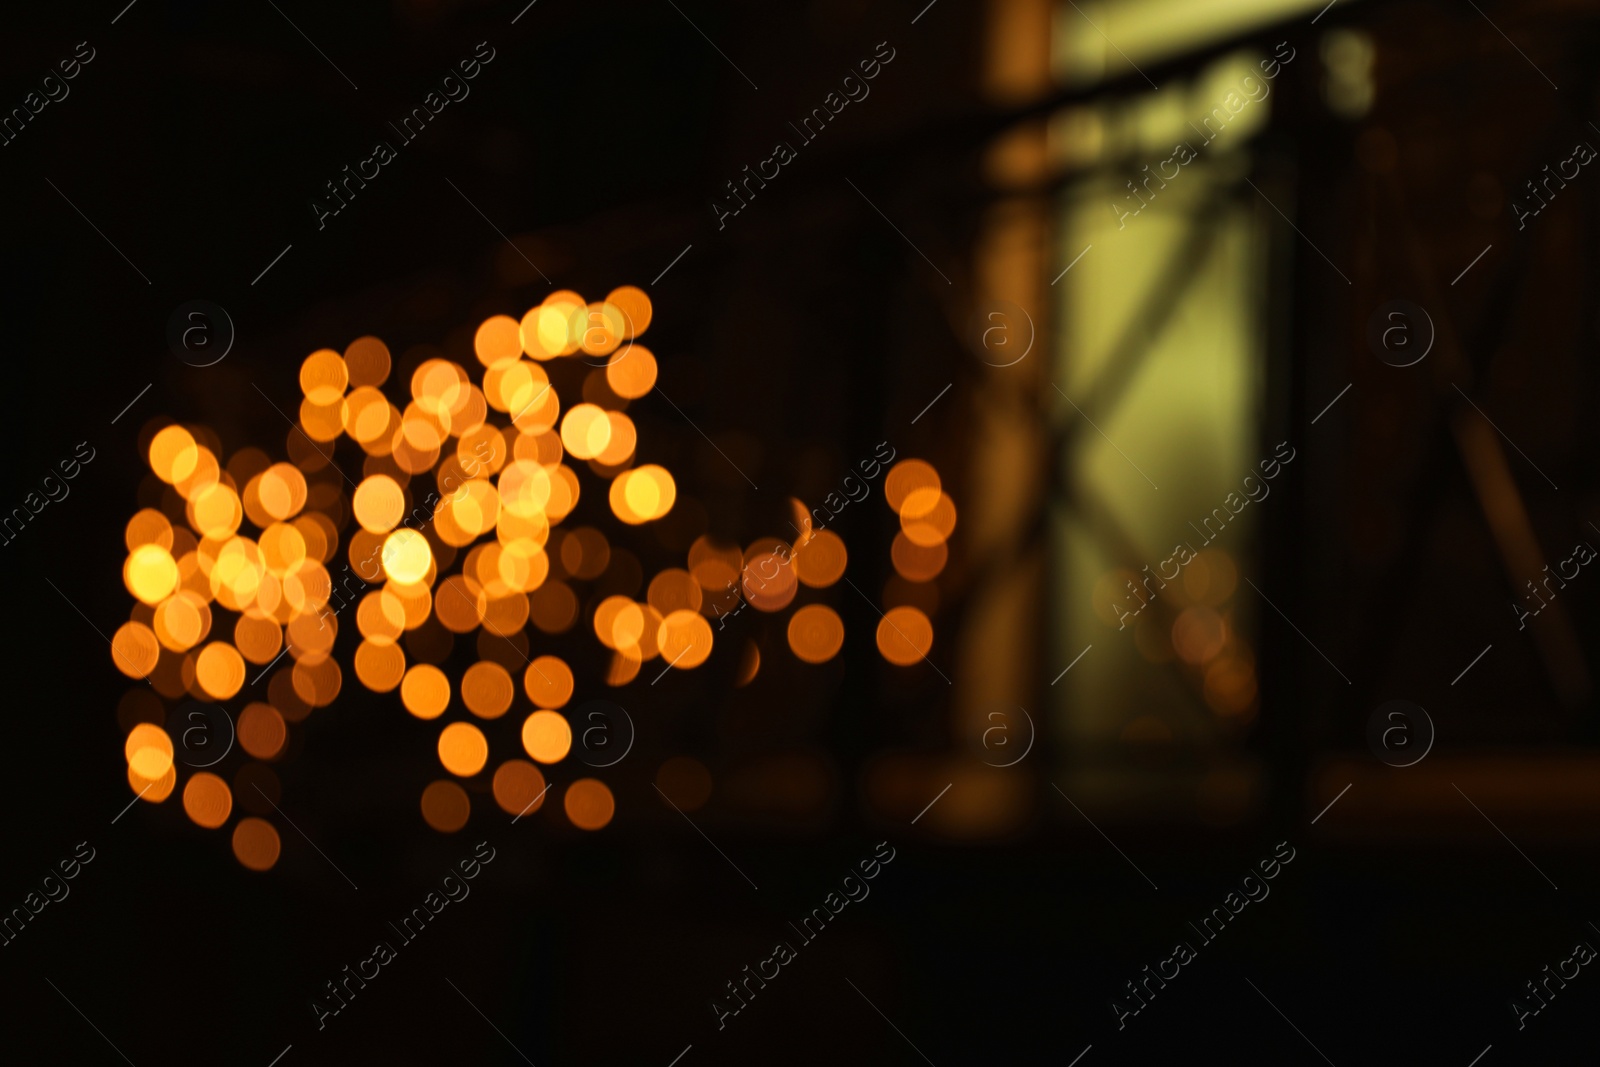 Photo of Beautiful street lights at night. Bokeh effect